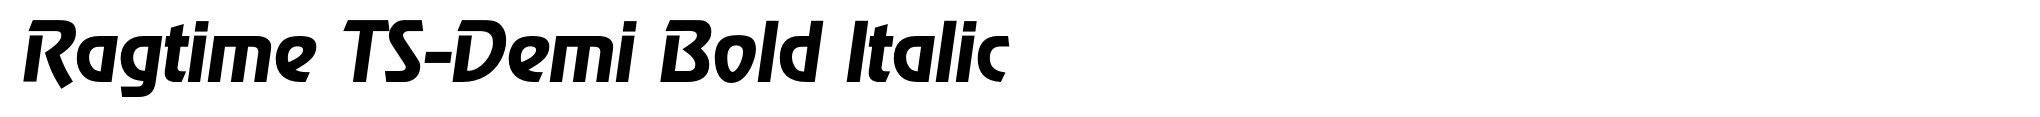 Ragtime TS-Demi Bold Italic image